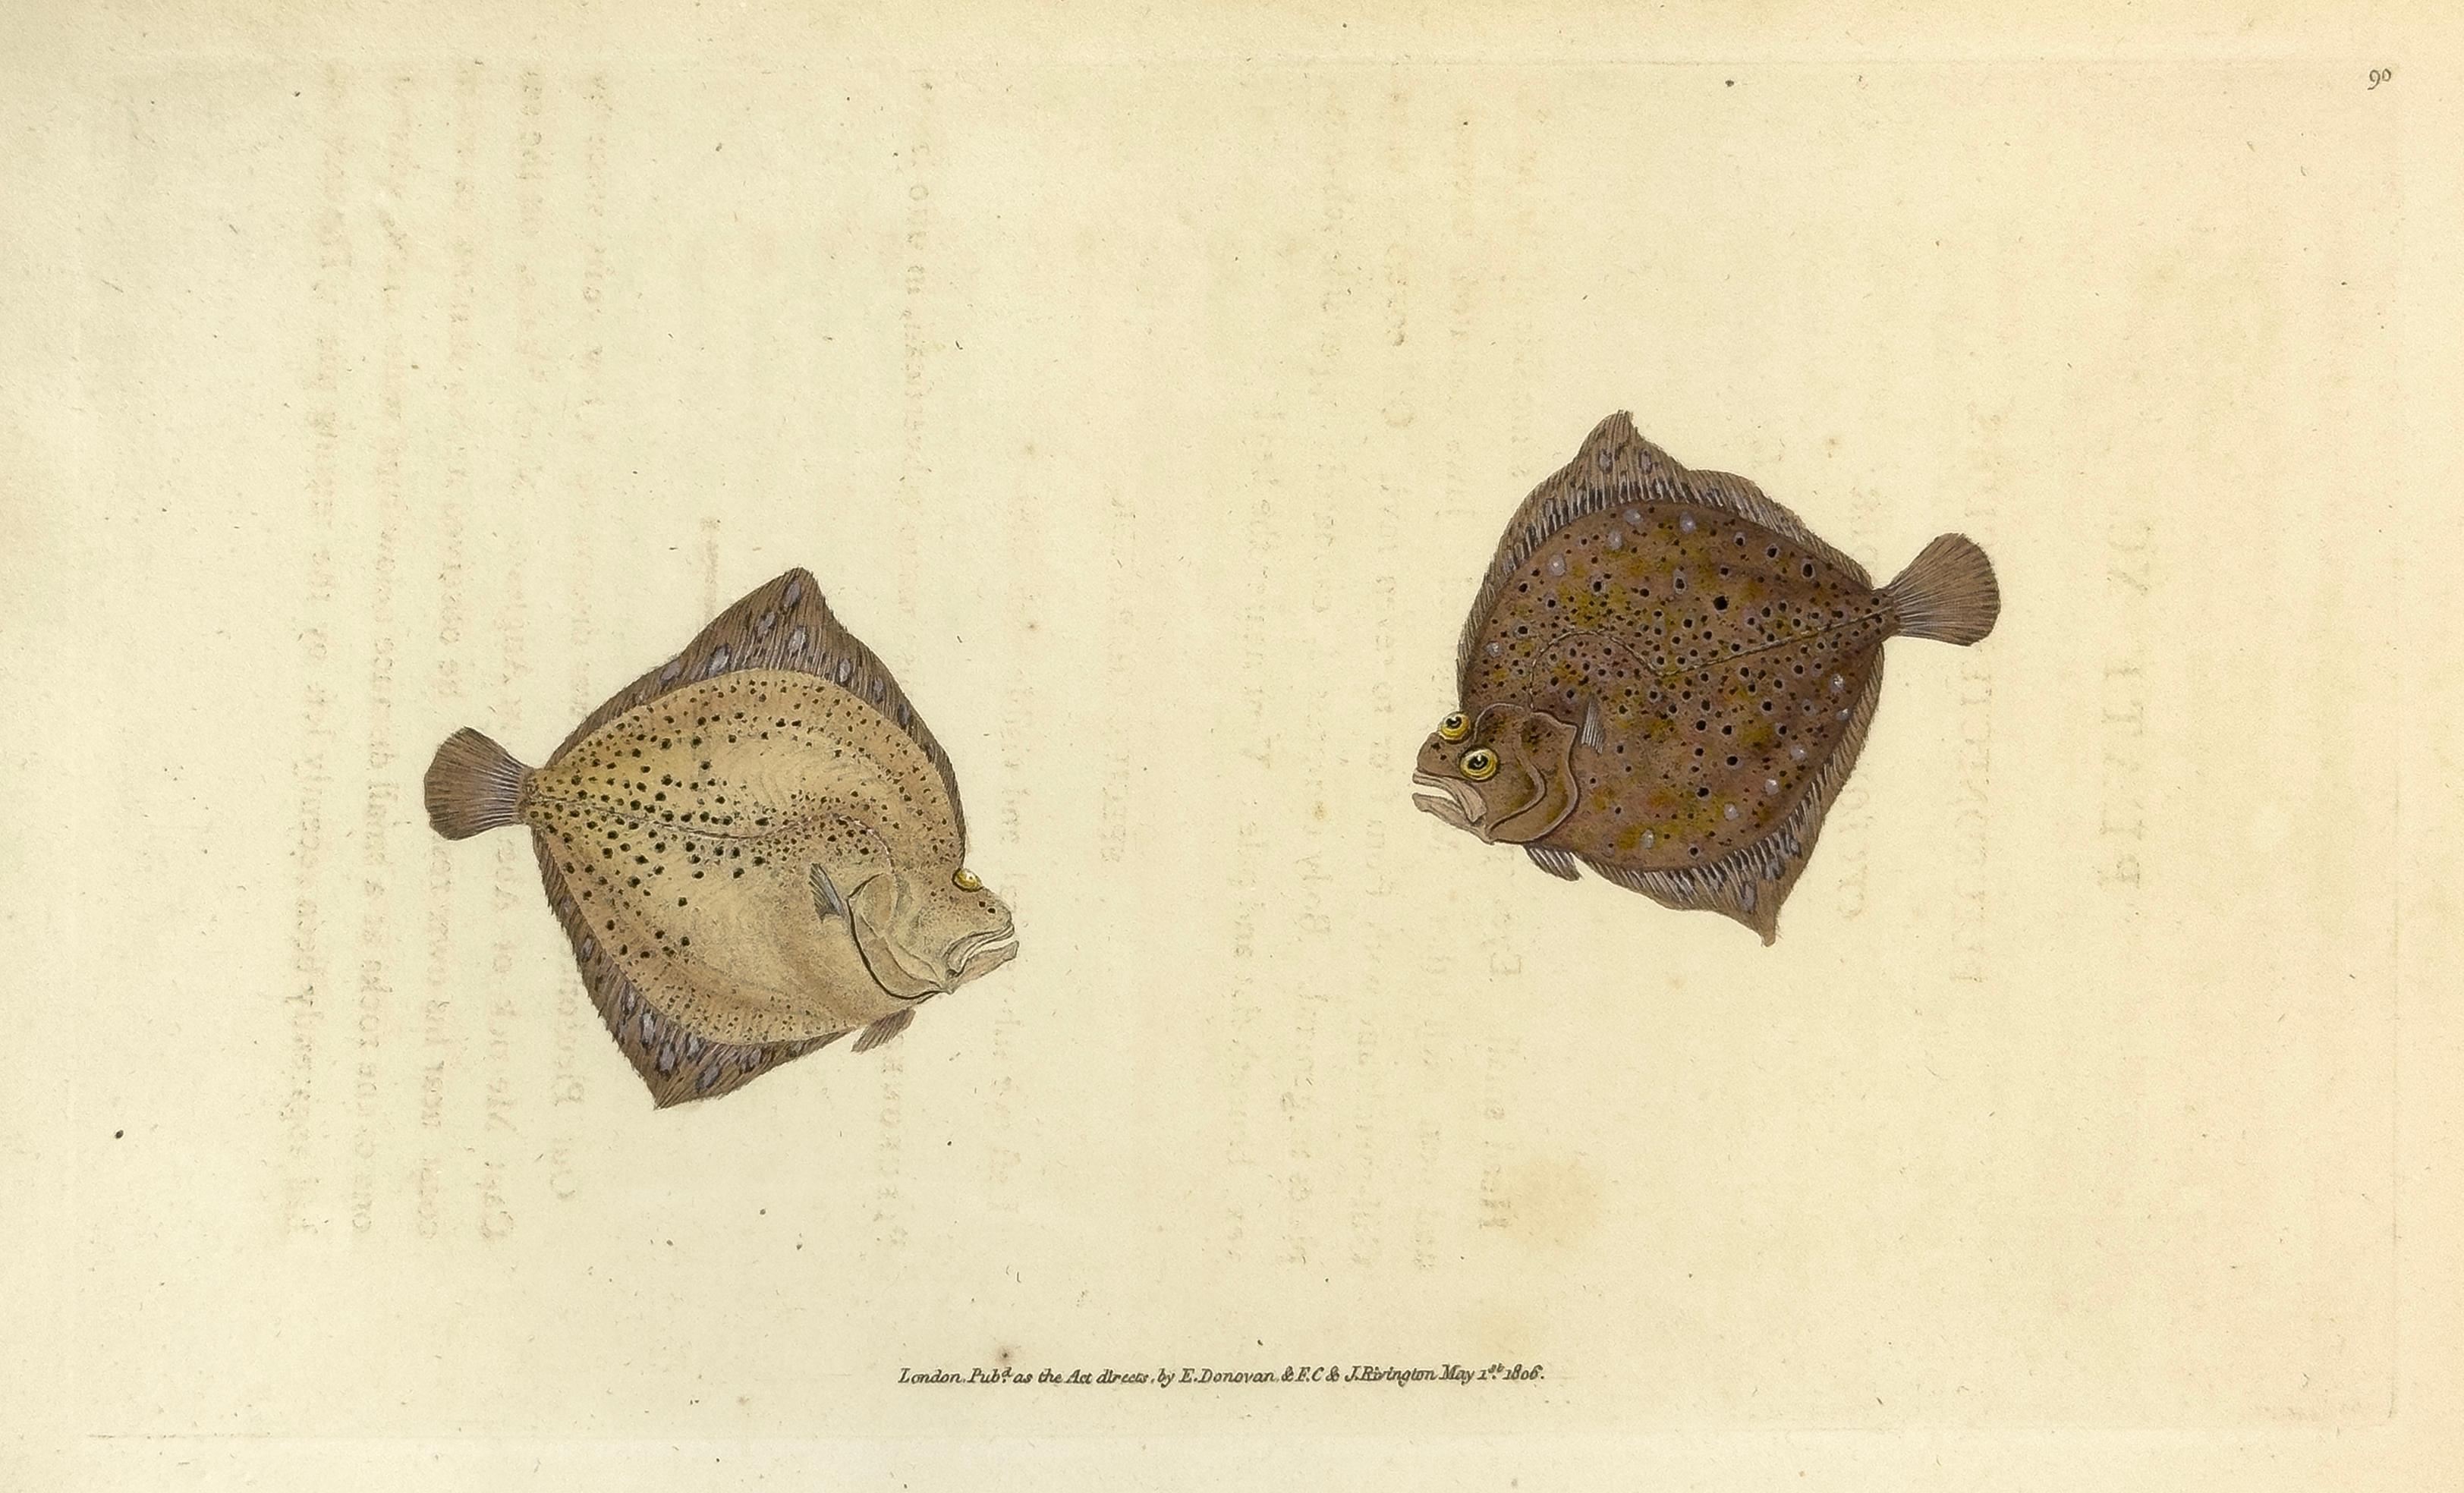 Edward Donovan Animal Print - 90: Pleuronectes cyclops, Cyclops Flounder